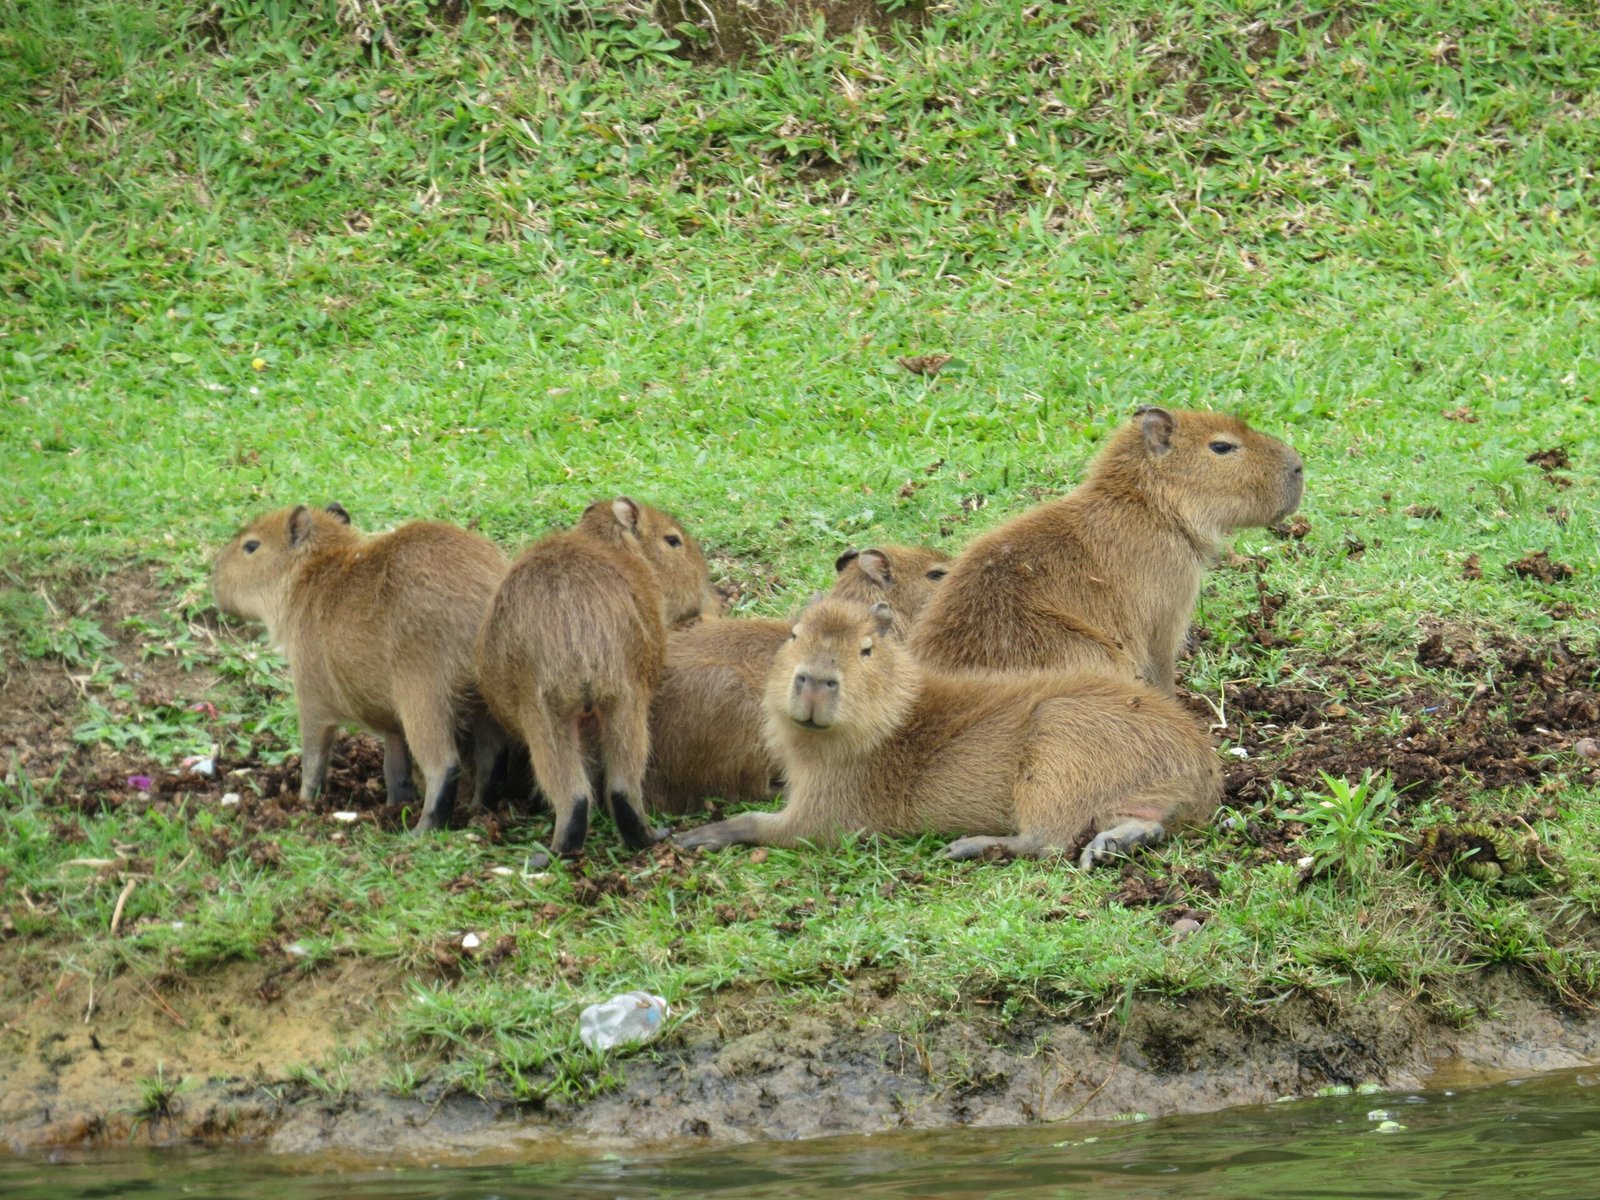 Where Can I Find a Capybara?